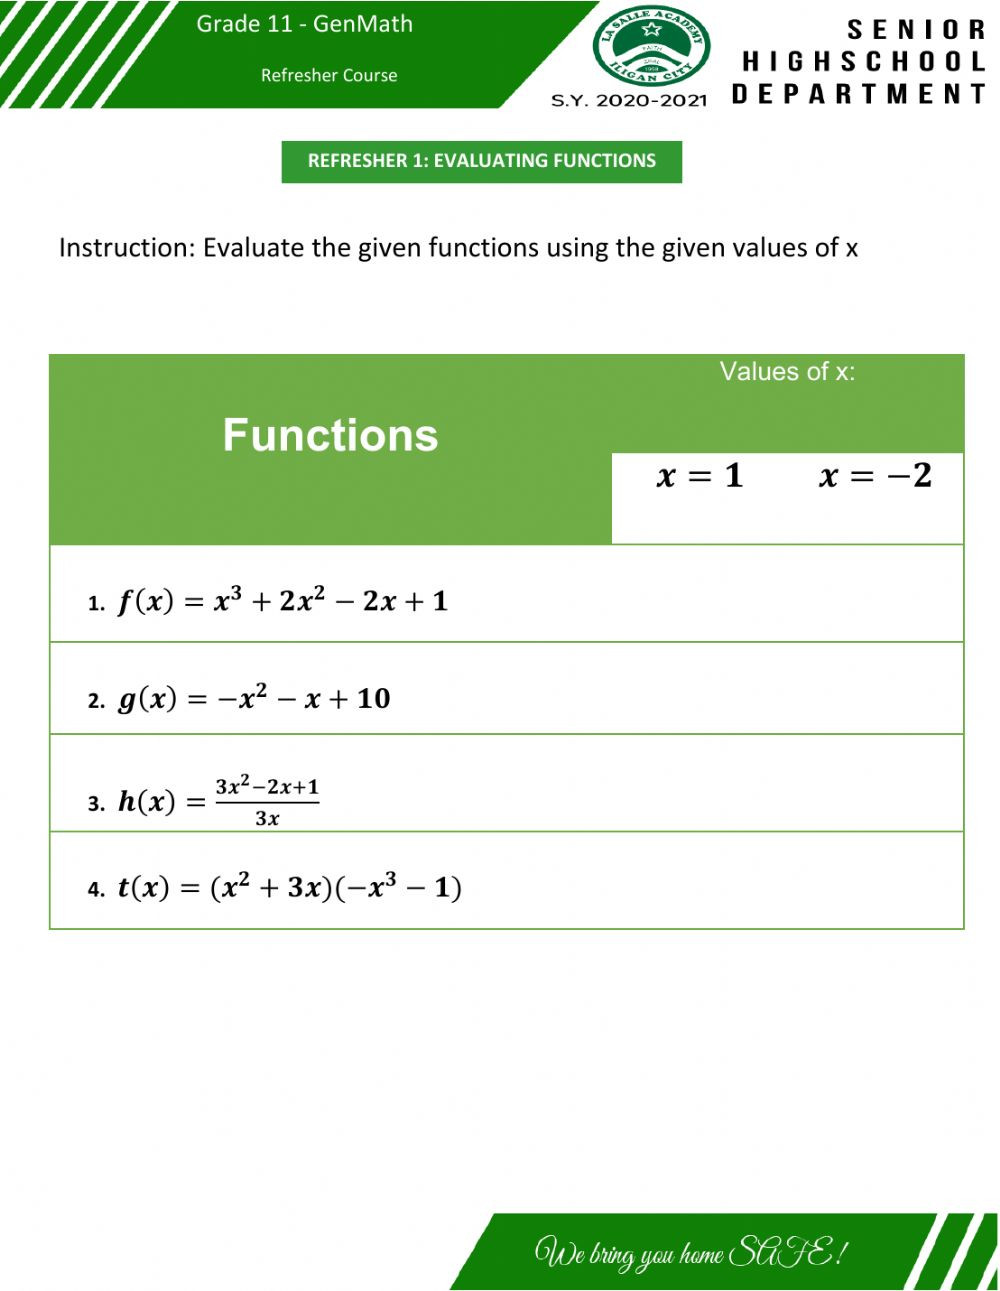 Evaluating Functions Worksheet Pdf Refresher 1 Evaluating Function Interactive Worksheet